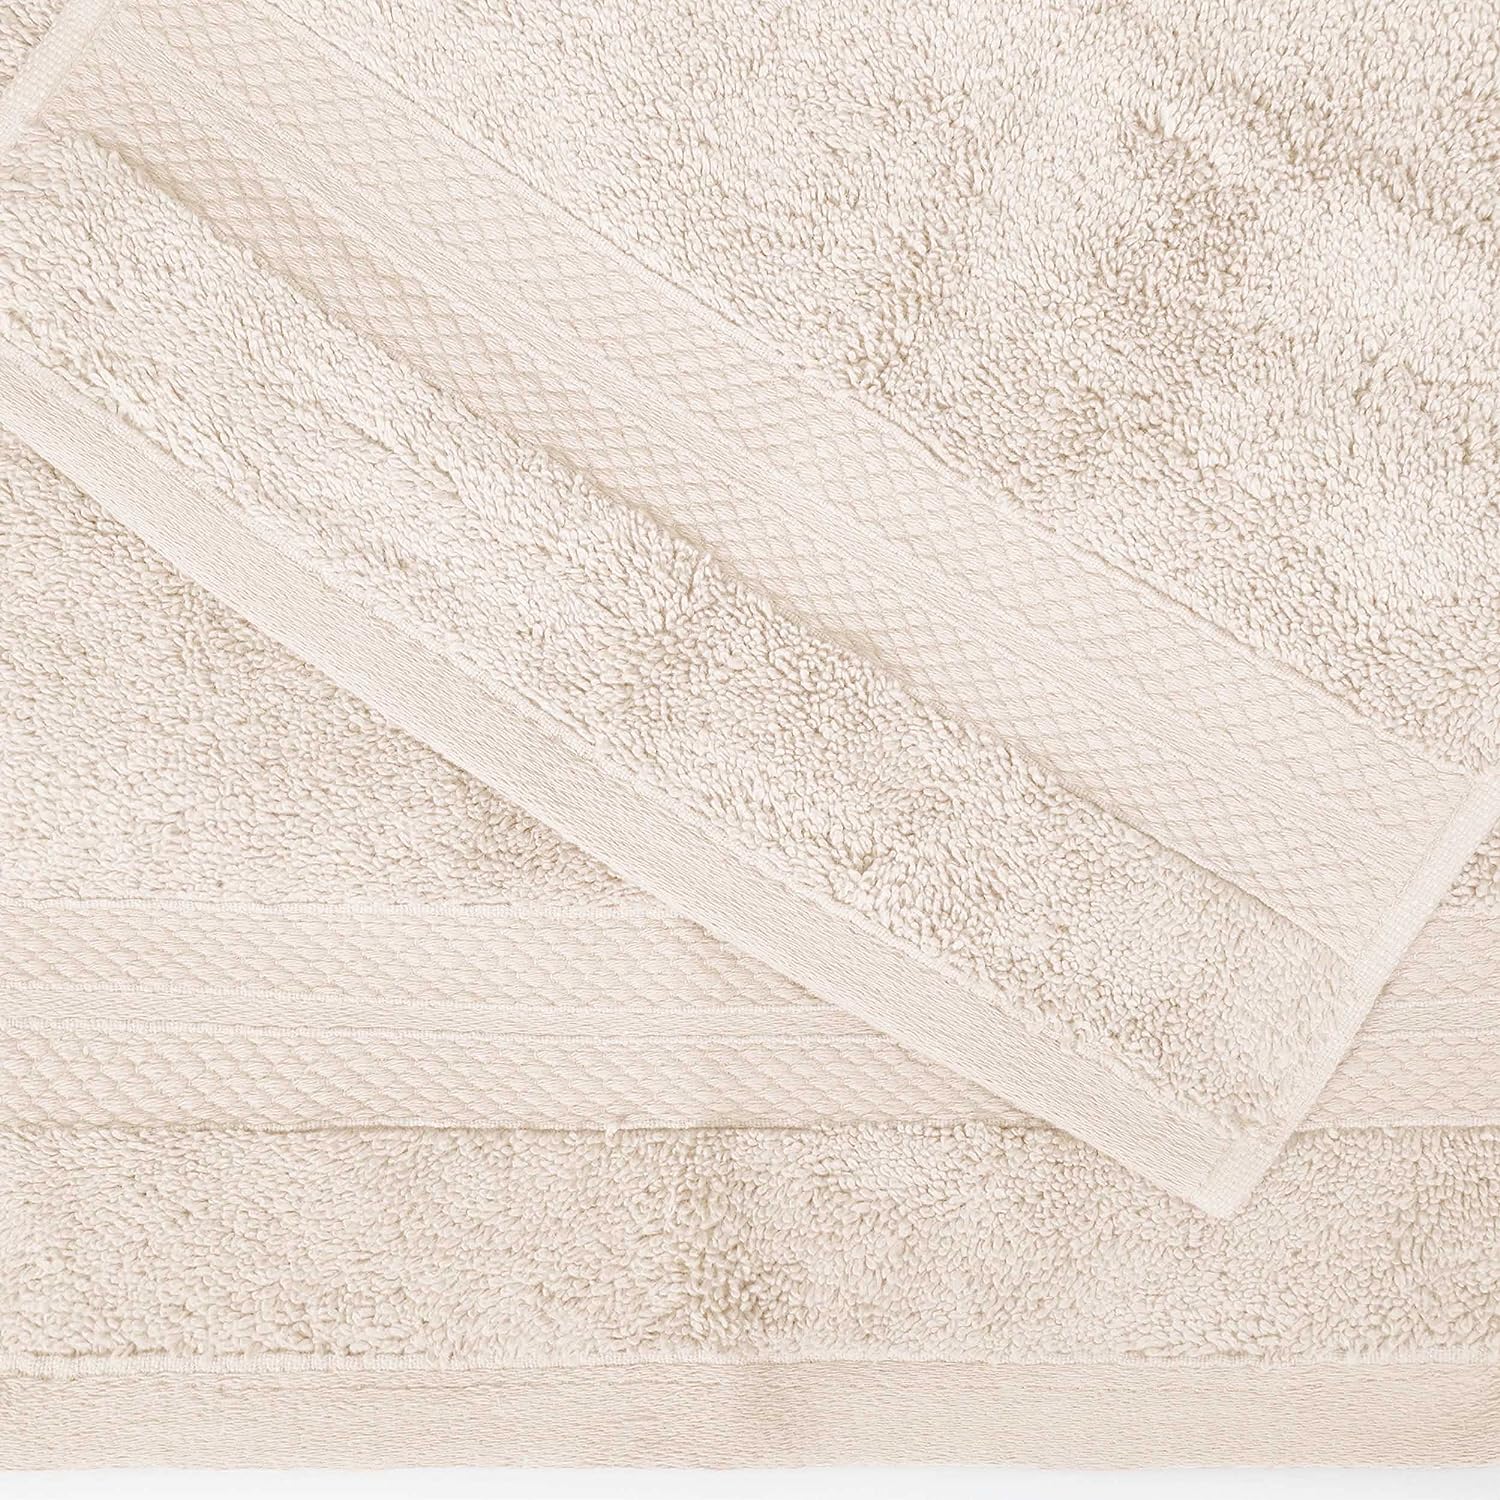 Superior Premium Turkish Cotton Assorted 12-Piece Towel Set - Ivory